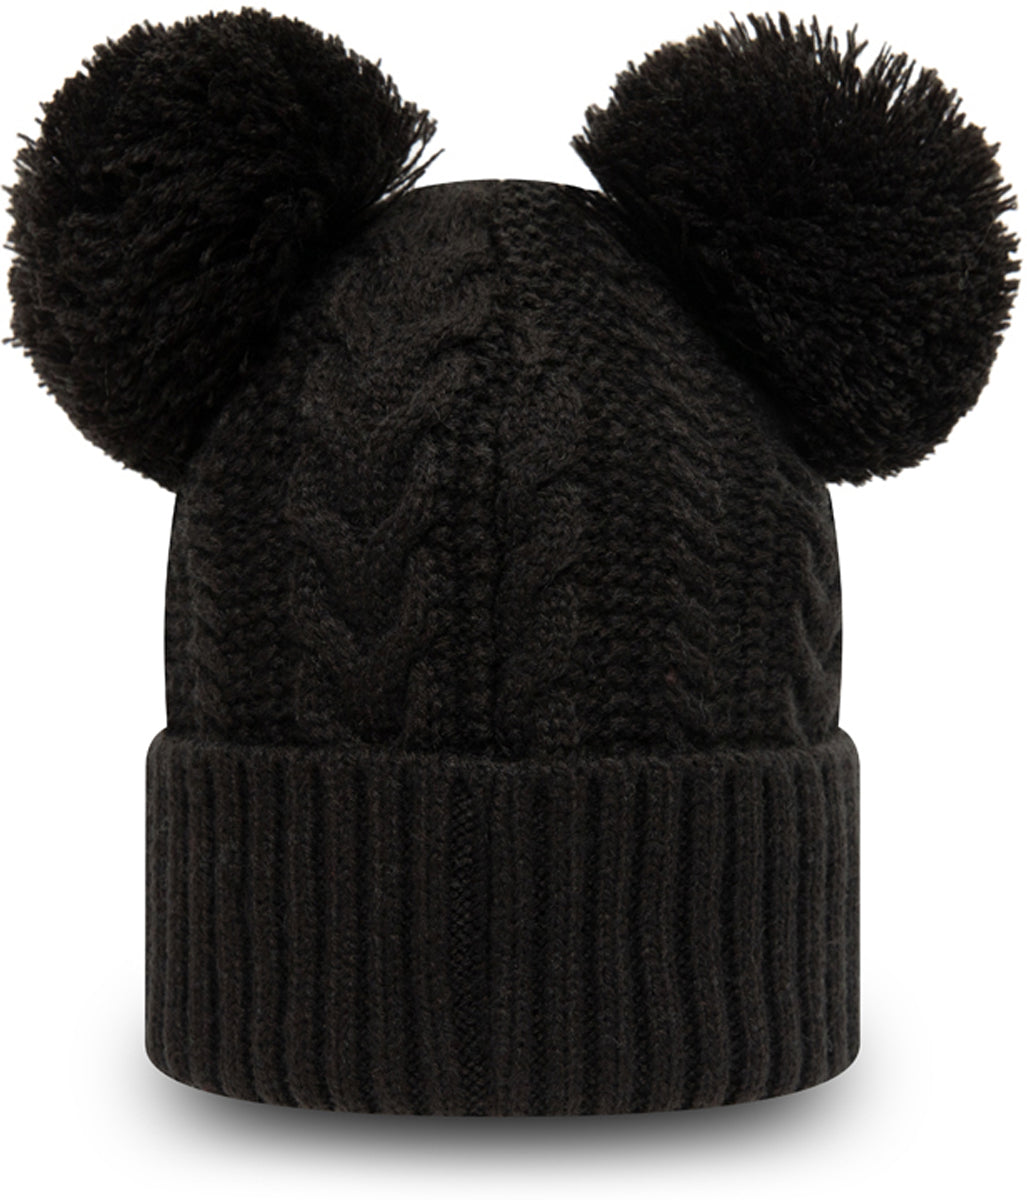 New Yankees New Double Pom Black Cuff Knit Bobble Hat ( lovemycap